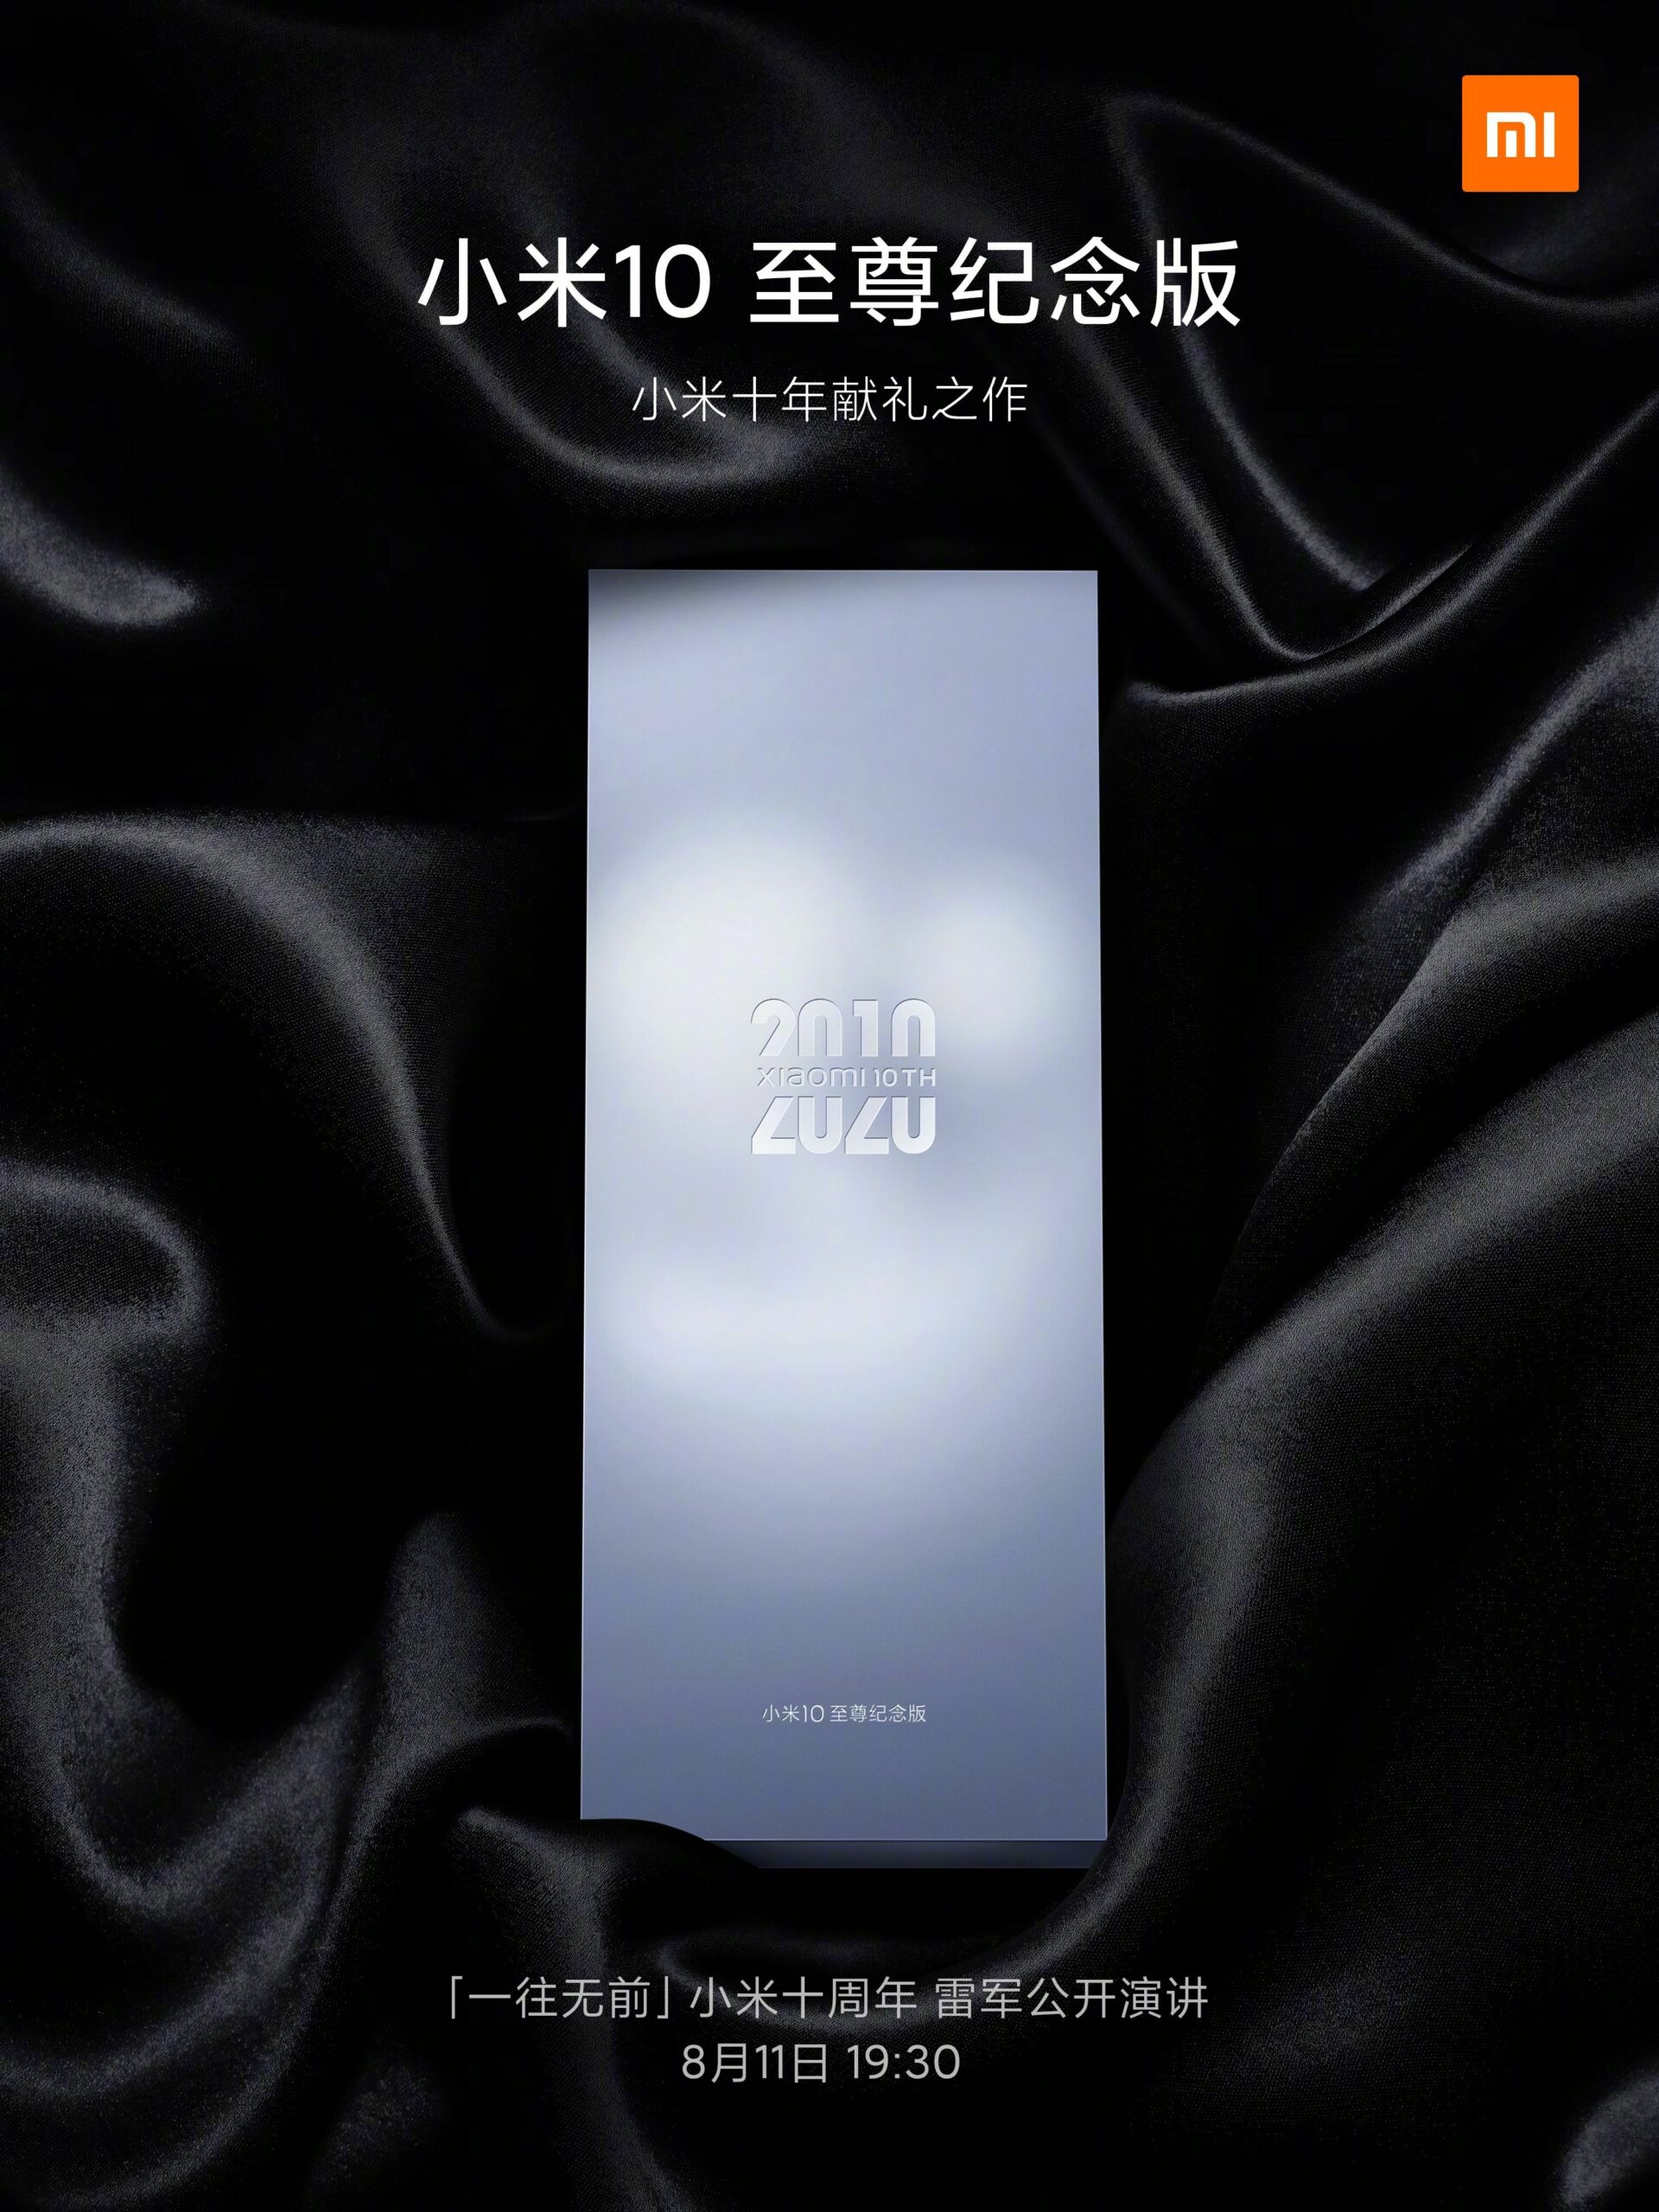 Xiaomi Mi 10 Extreme სამახსოვრო გამოცემა 11 აგვისტო